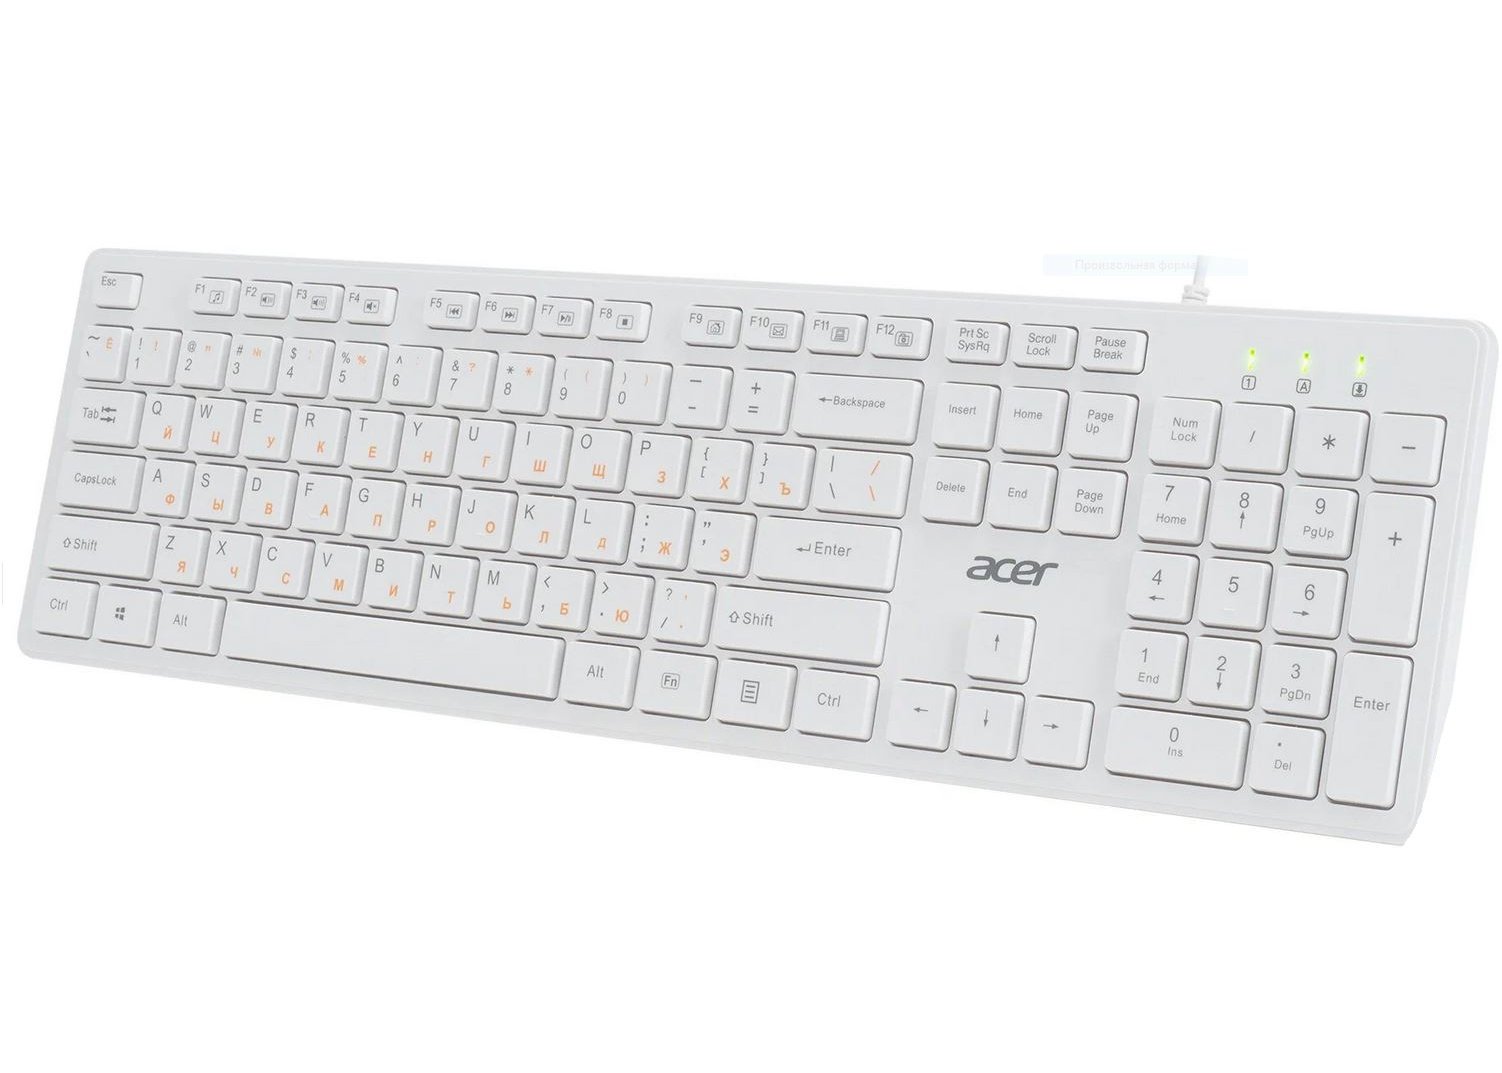 Клавиатура Acer OKW123 USB белый